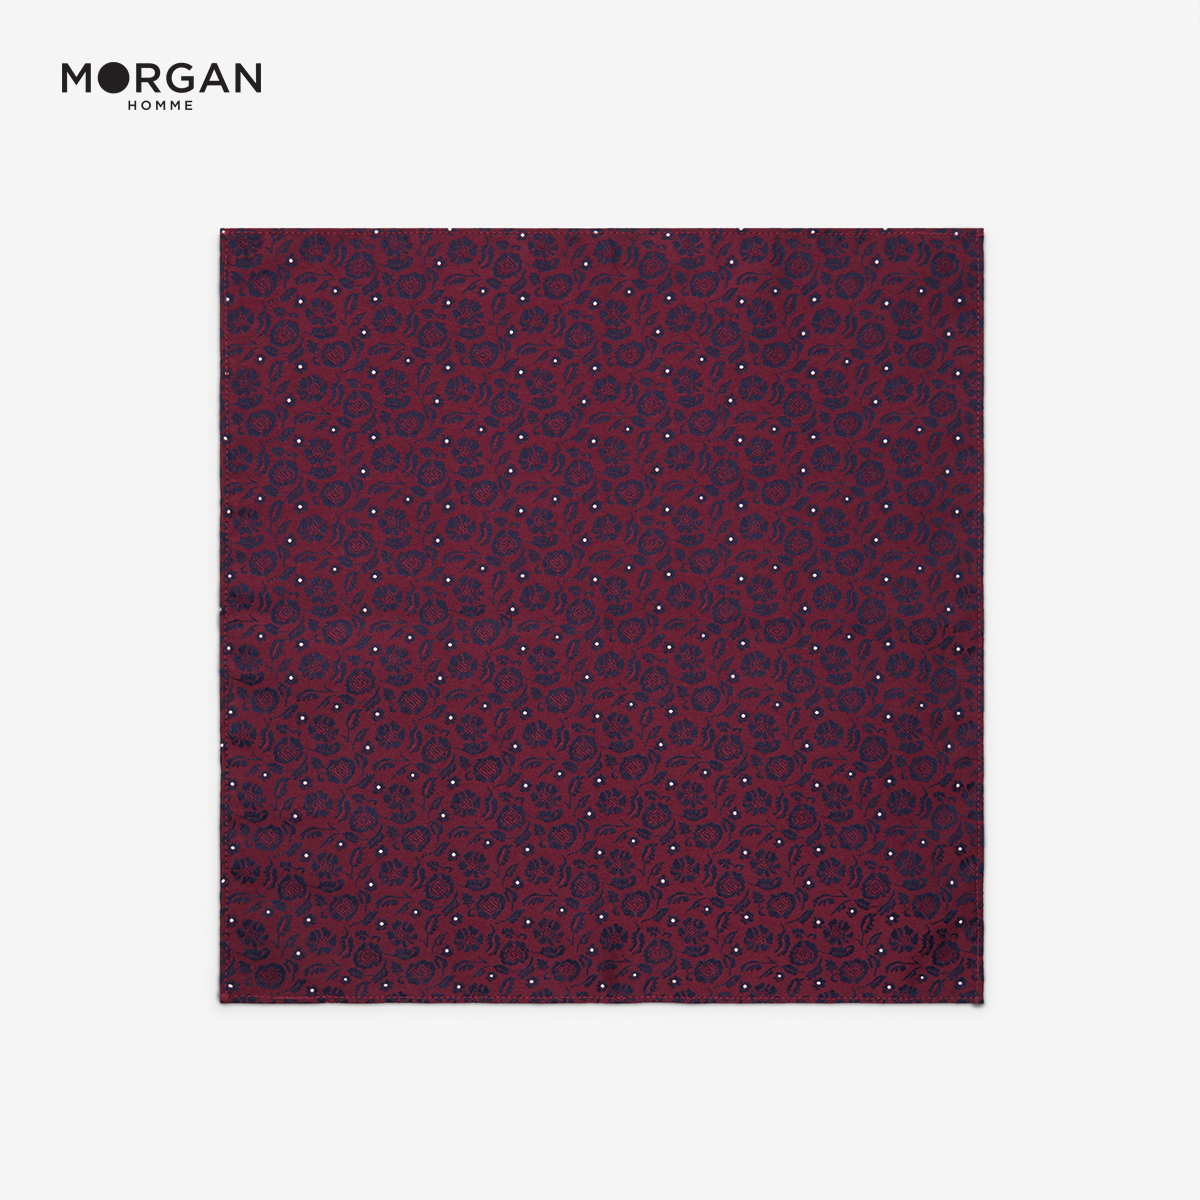 Morgan Homme ผ้าเช็ดหน้า ผ้าใส่กระเป๋าสูทออกงาน  Pocket Square รุ่น TITUS 01 สีน้ำตาล และสีแดง